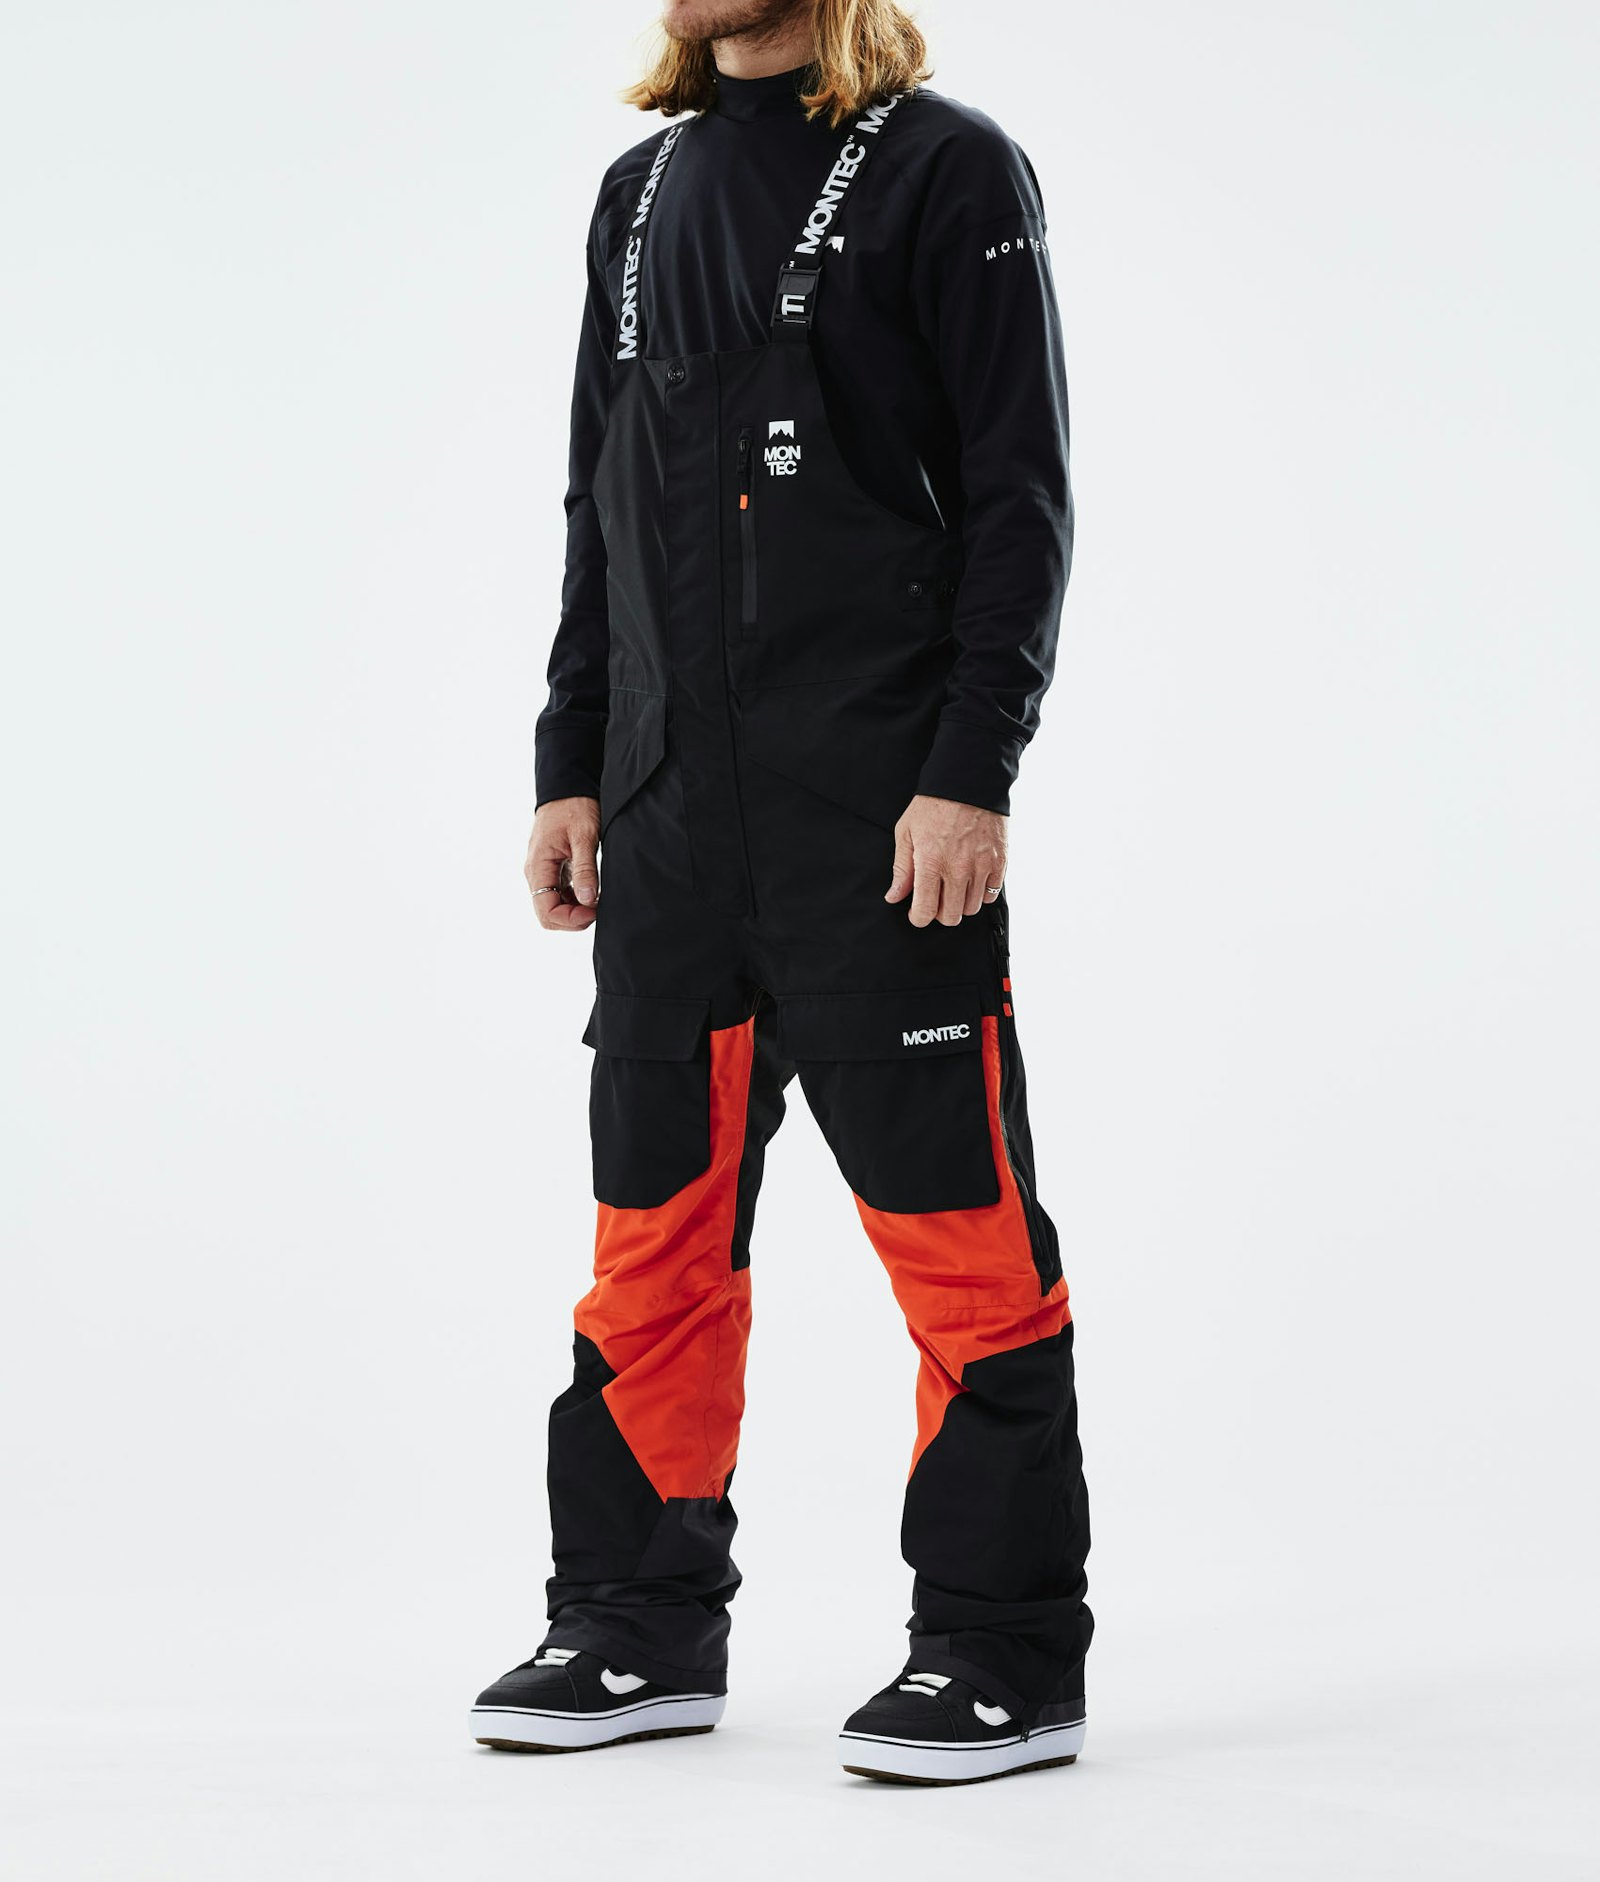 Fawk 2021 Snowboardhose Herren Black/Orange